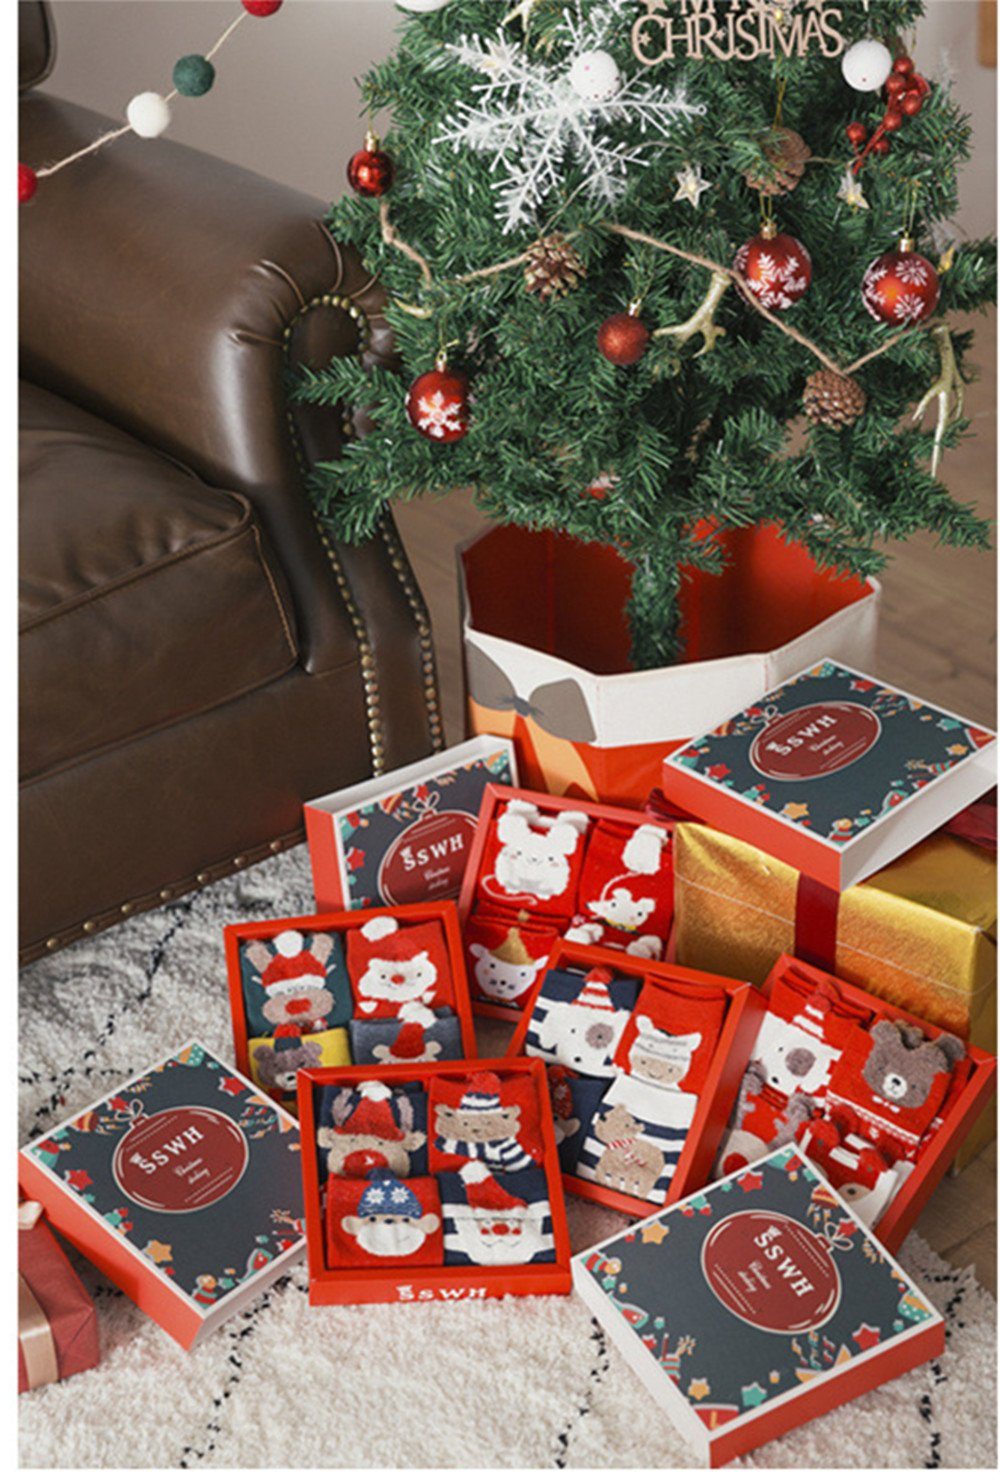 Box Socken socken Thermosocken XDeer red (Box, Paar)Weihnachtssocken/Sushi Thermosocken 4-Paar) Weihnachtsgeschenke Socken/Pizza Flauschige Wintersocken(3/4 Geschenk mit